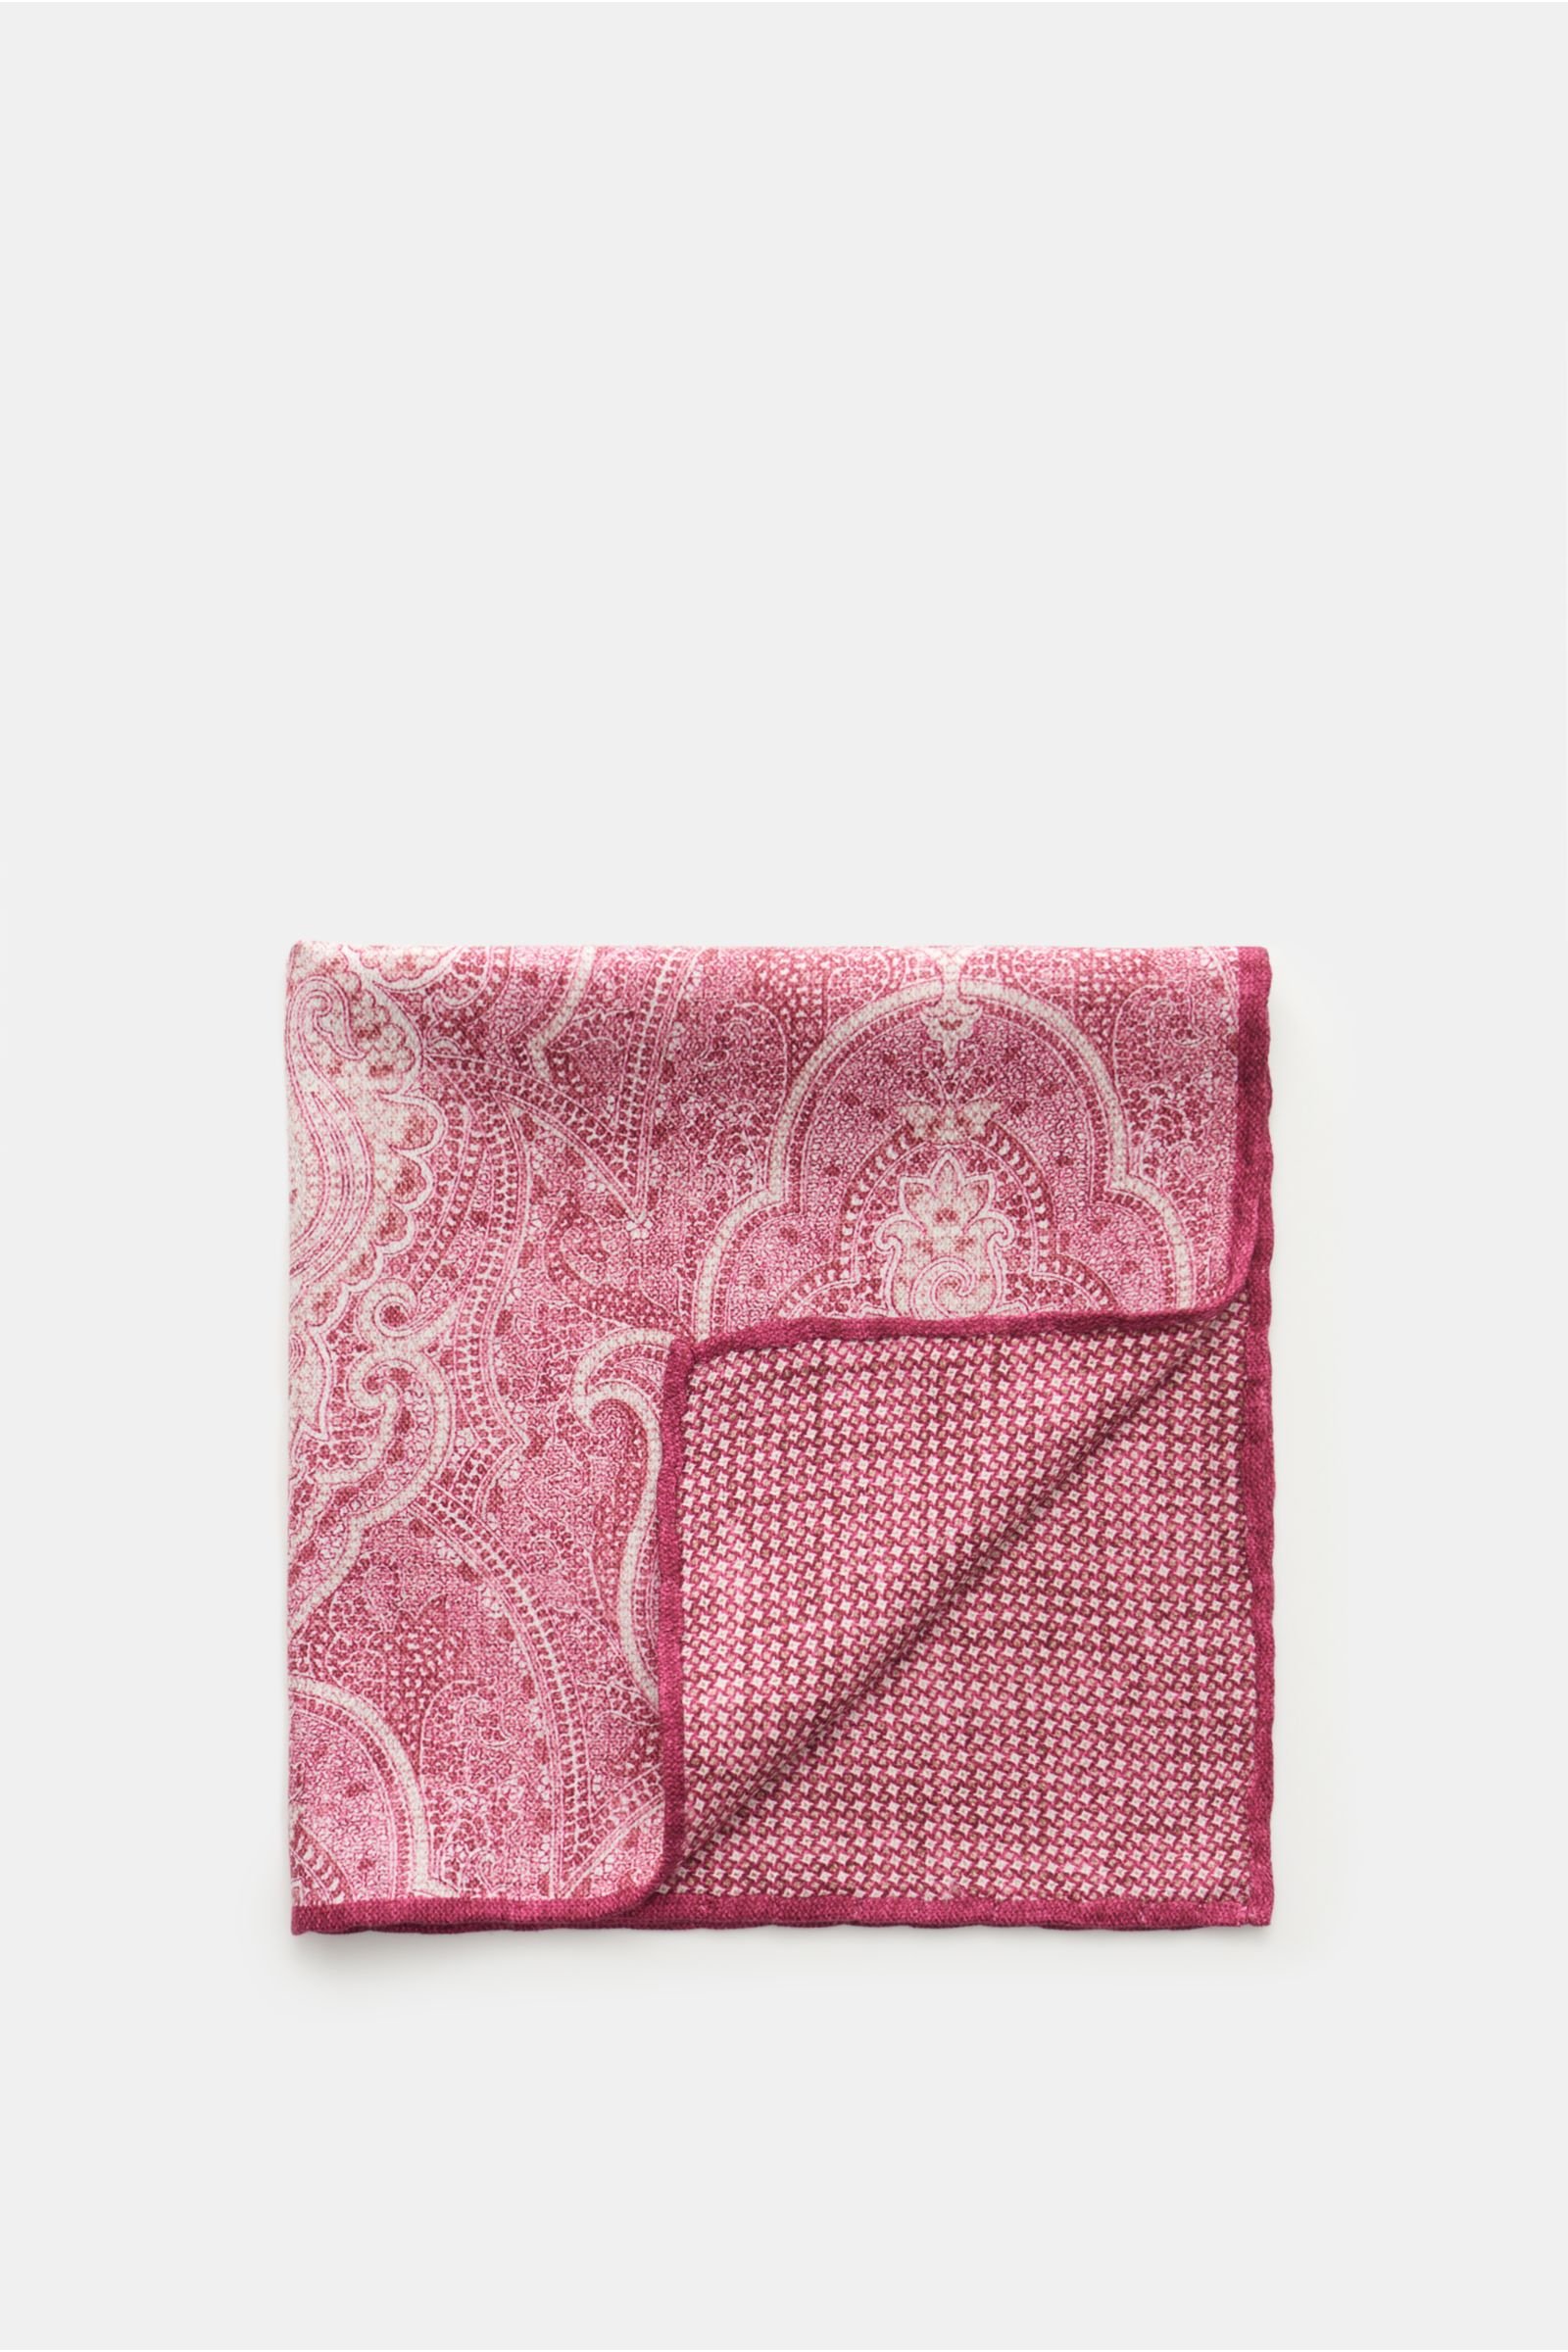 Silk pocket square burgundy/off-white patterned